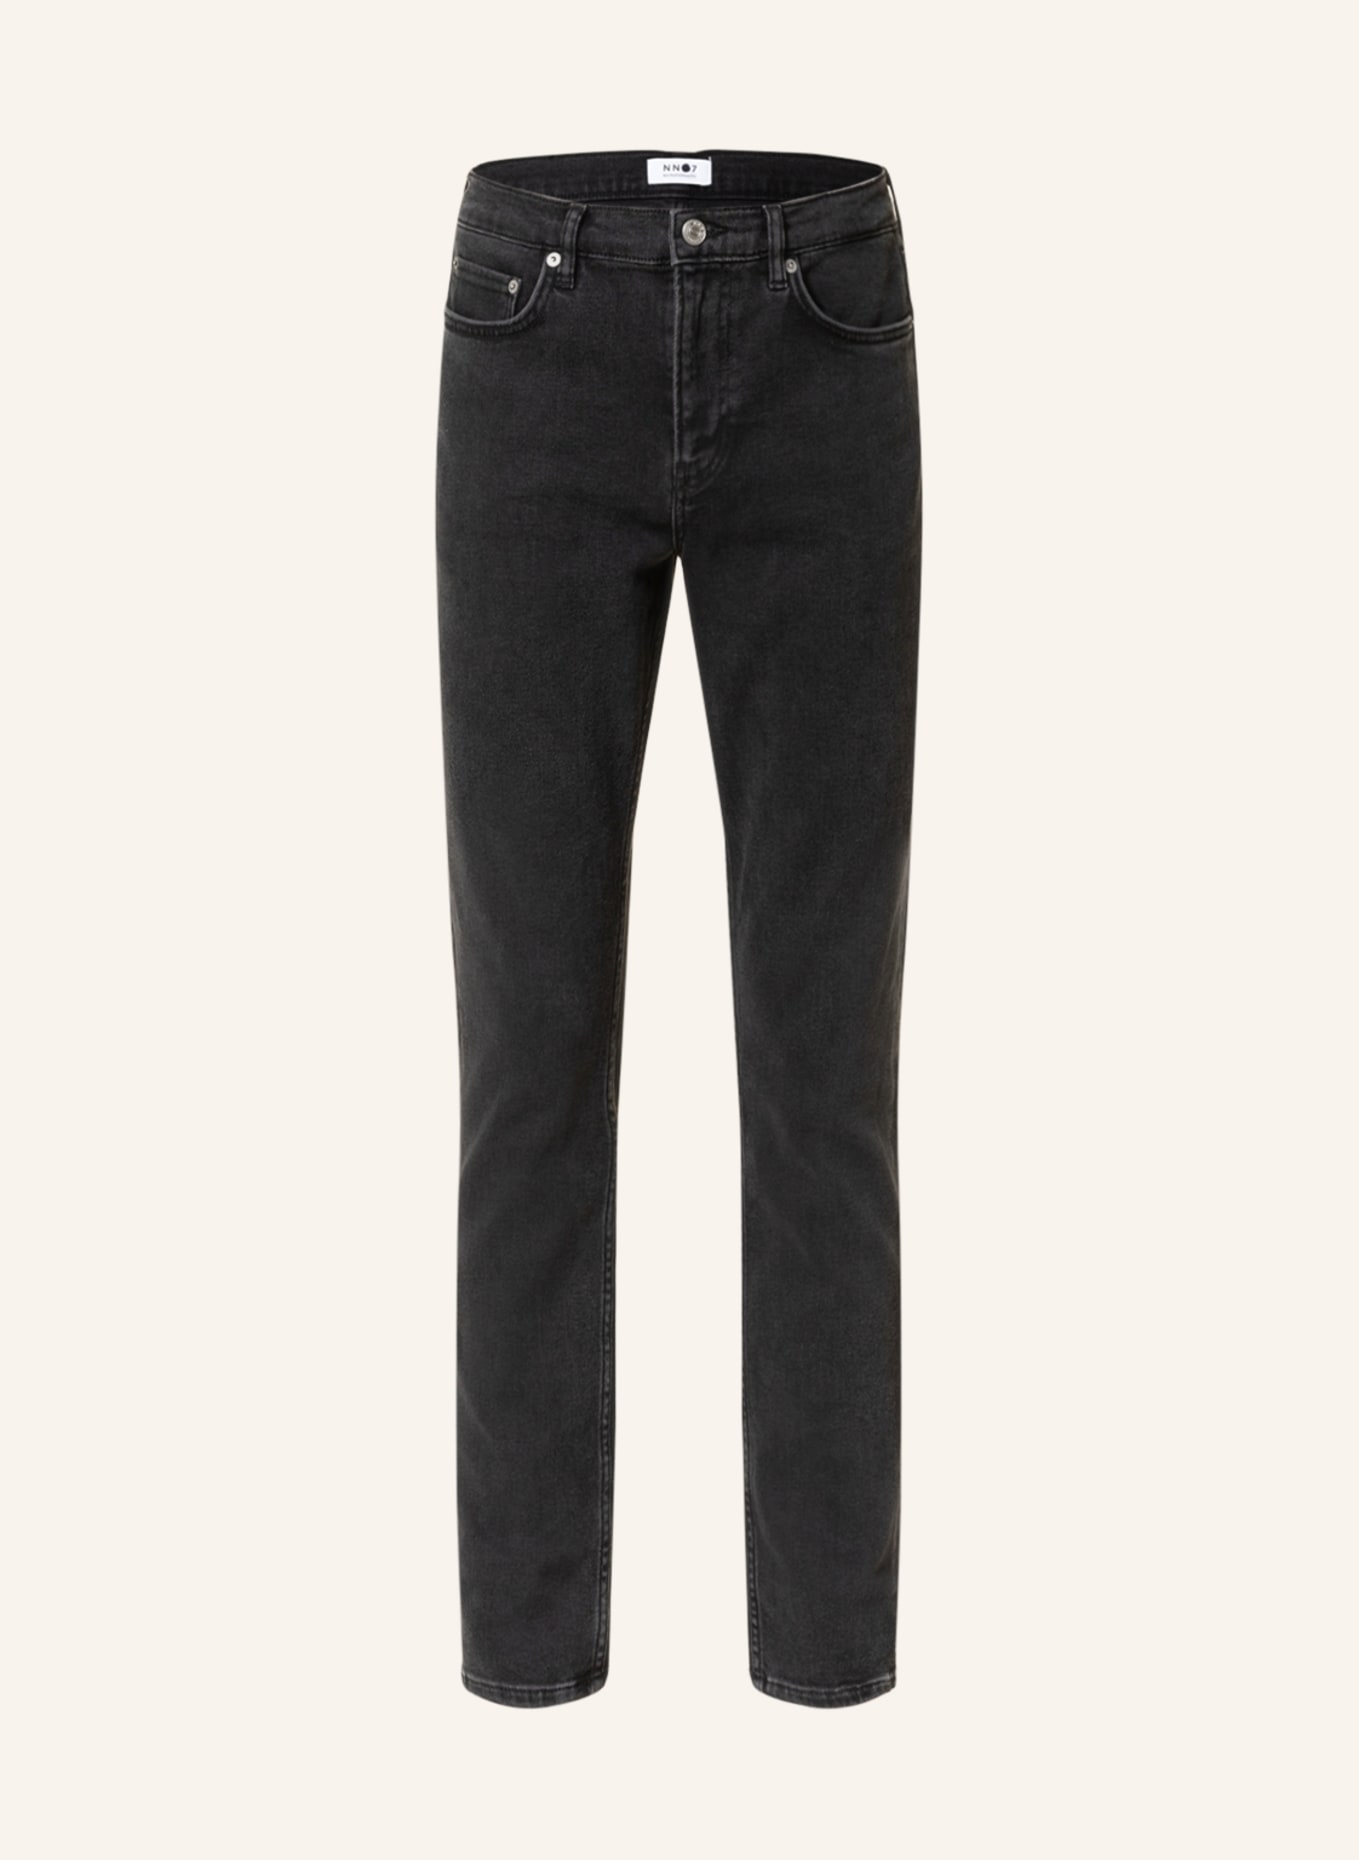 NN.07 Jeans SLATER Slim Fit, Farbe: 909 Grey Denim (Bild 1)